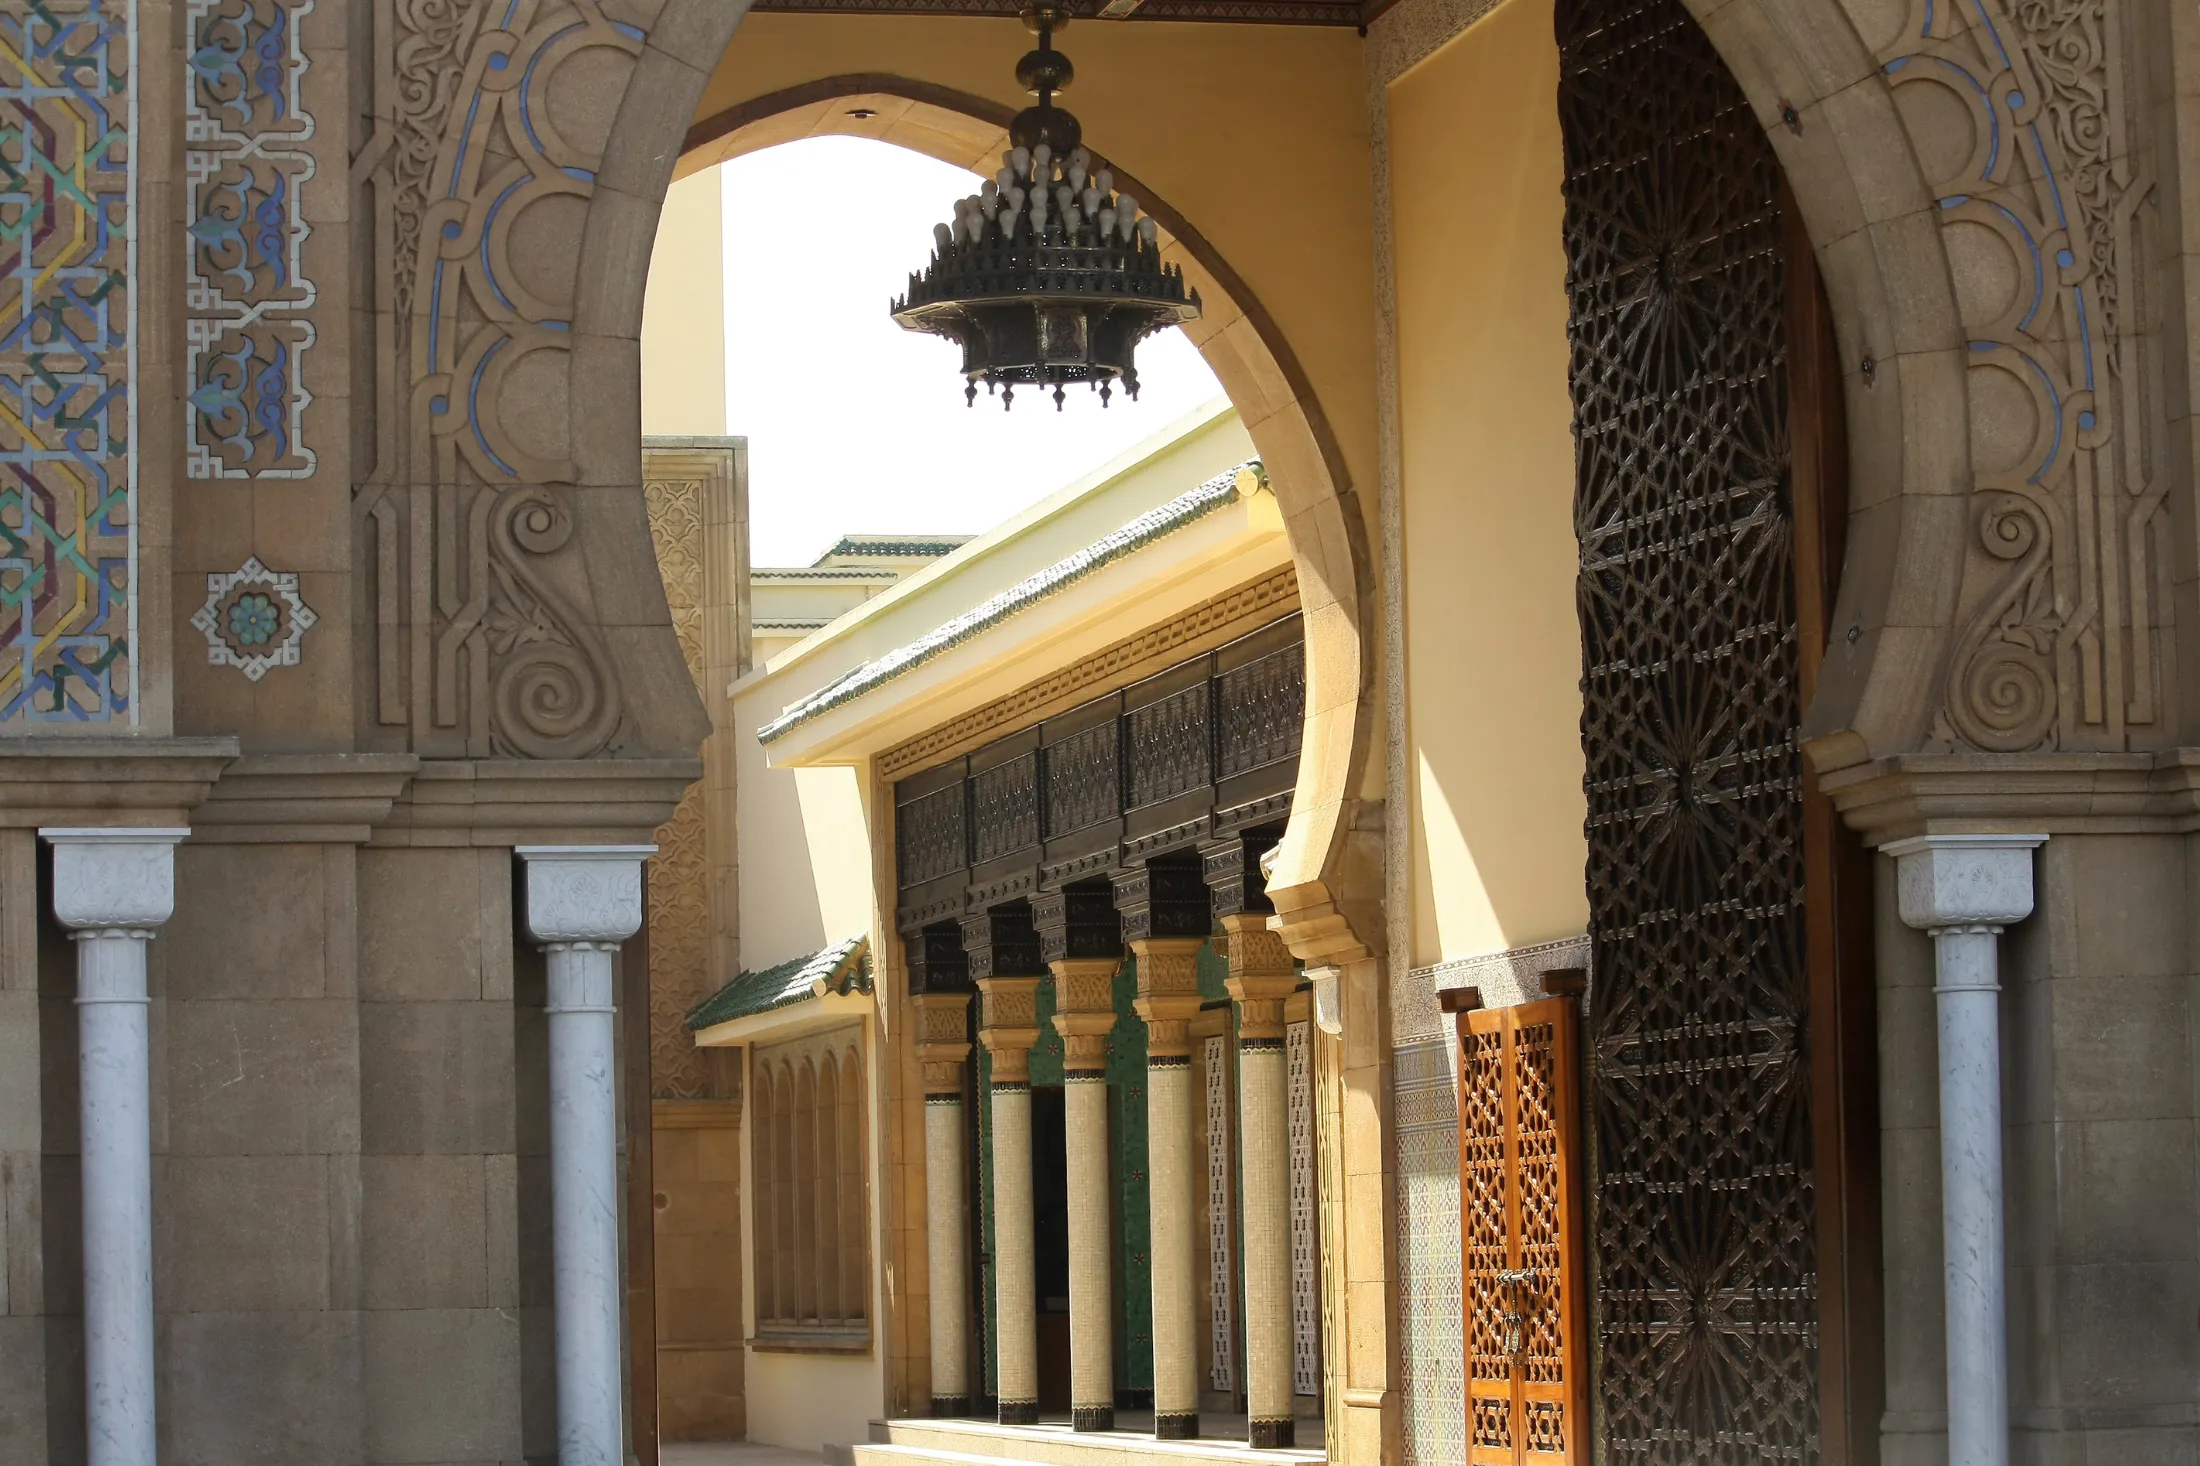 Inside of the Royal palace Rabat Morocco.